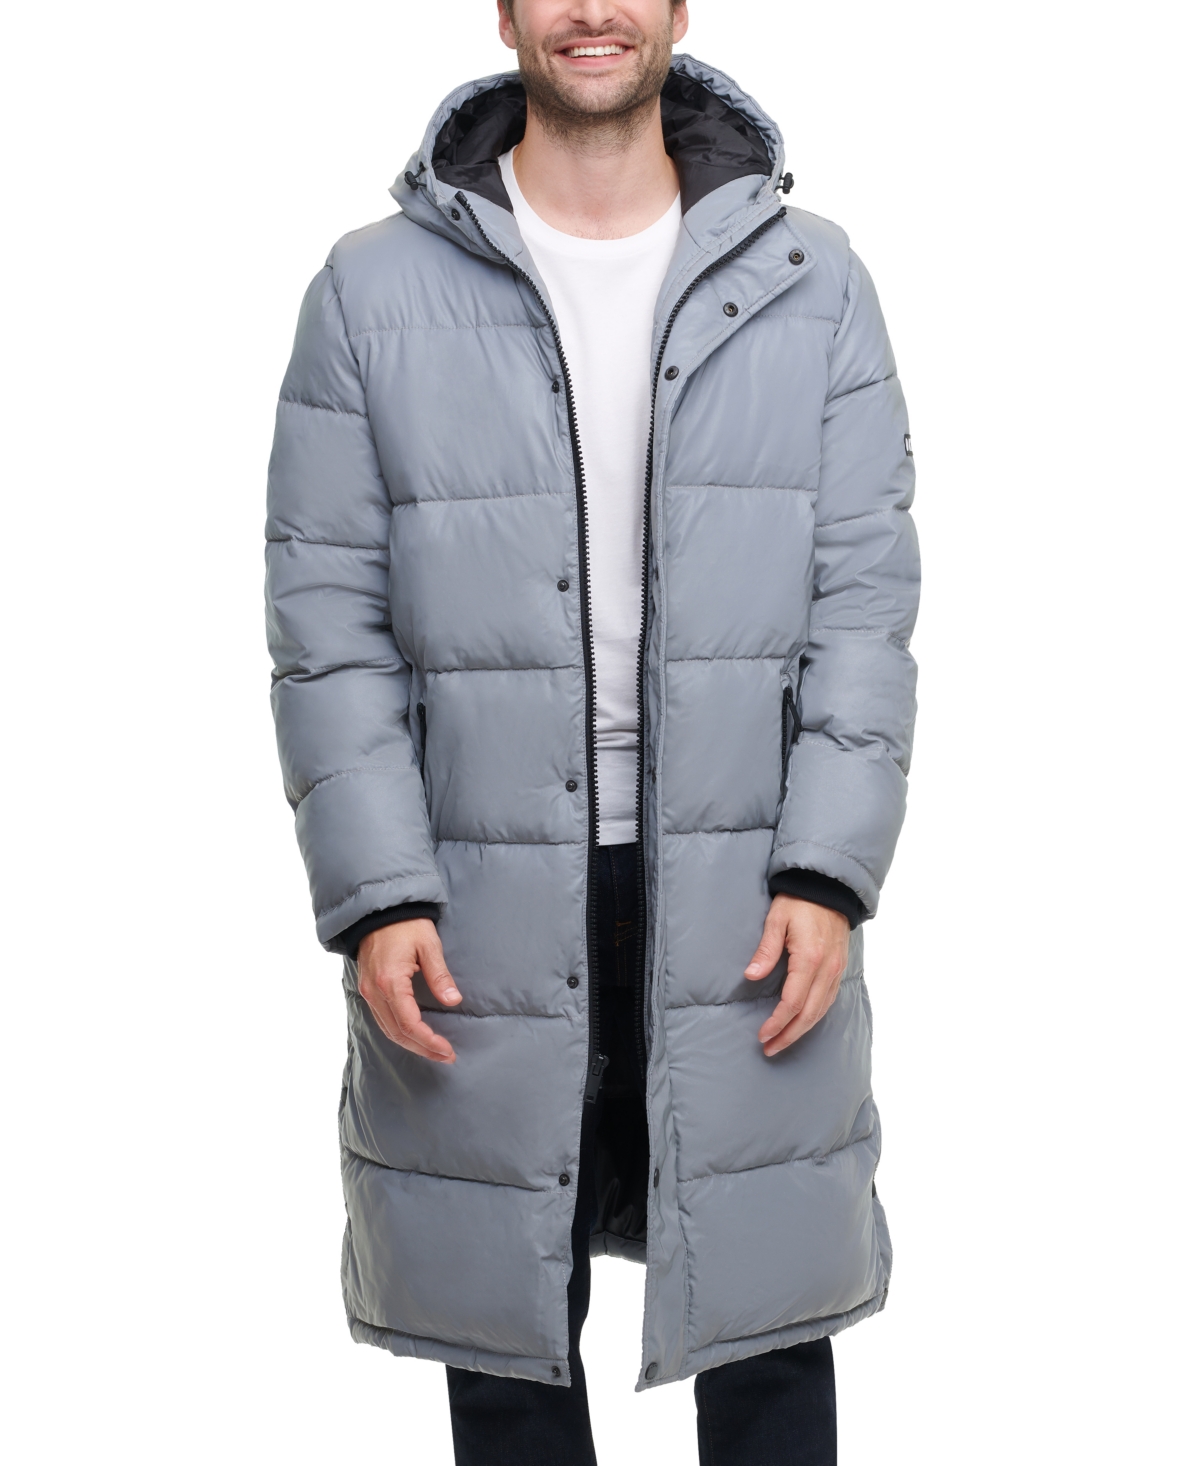 Long Hooded Parka Men's Jacket, Created for Macy's - Black